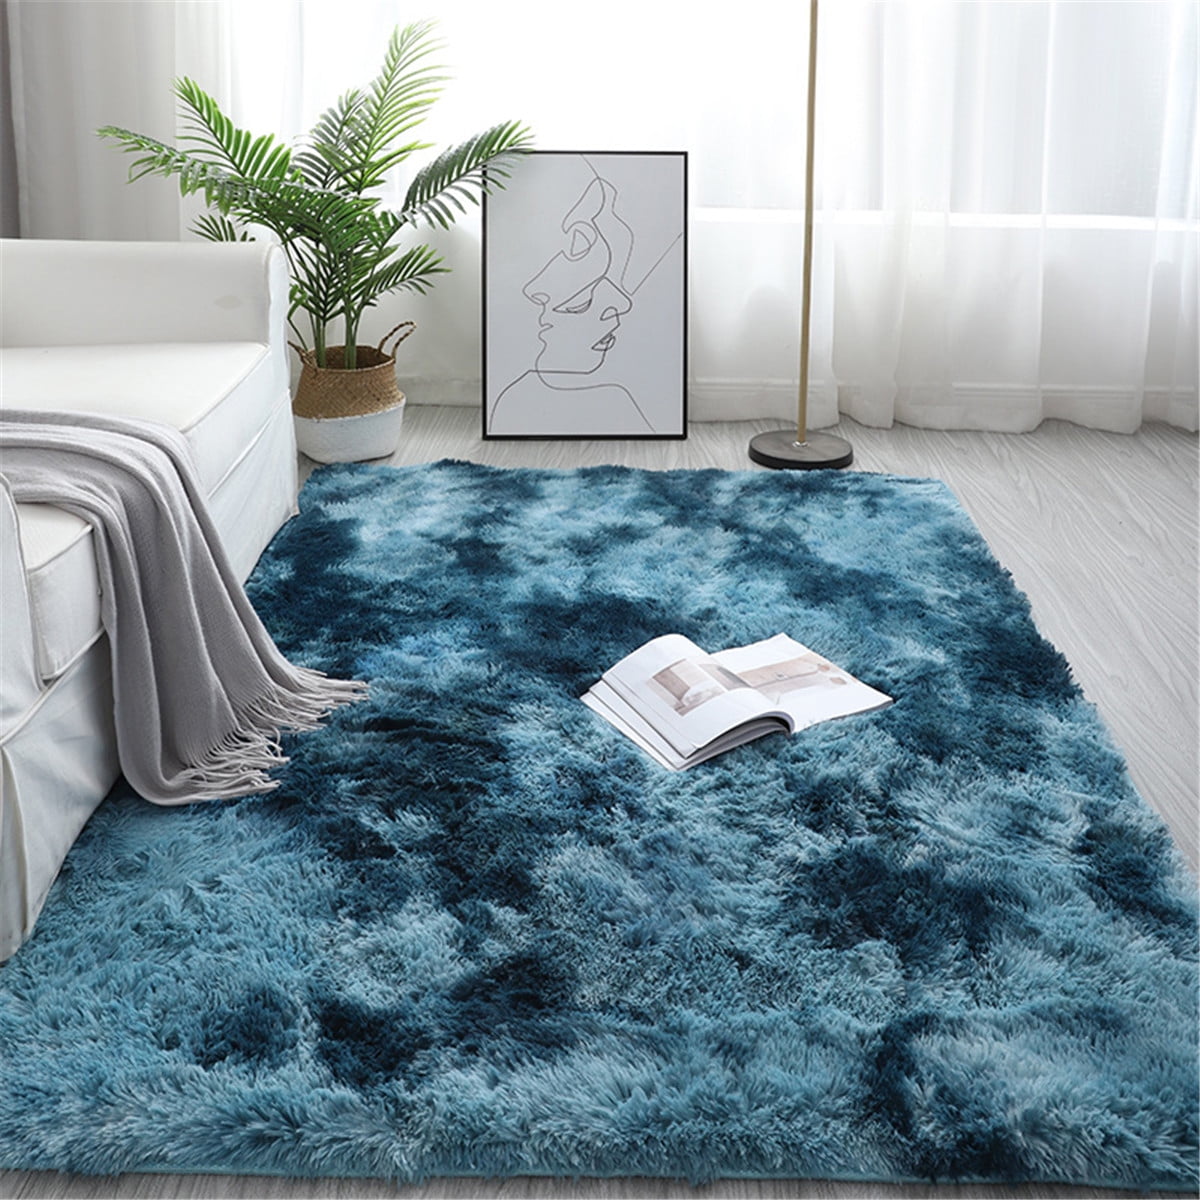 Soft Area Rugs Fluffy Modern Geometric Rugs for Bedroom Living Room 5ft x 8ft 